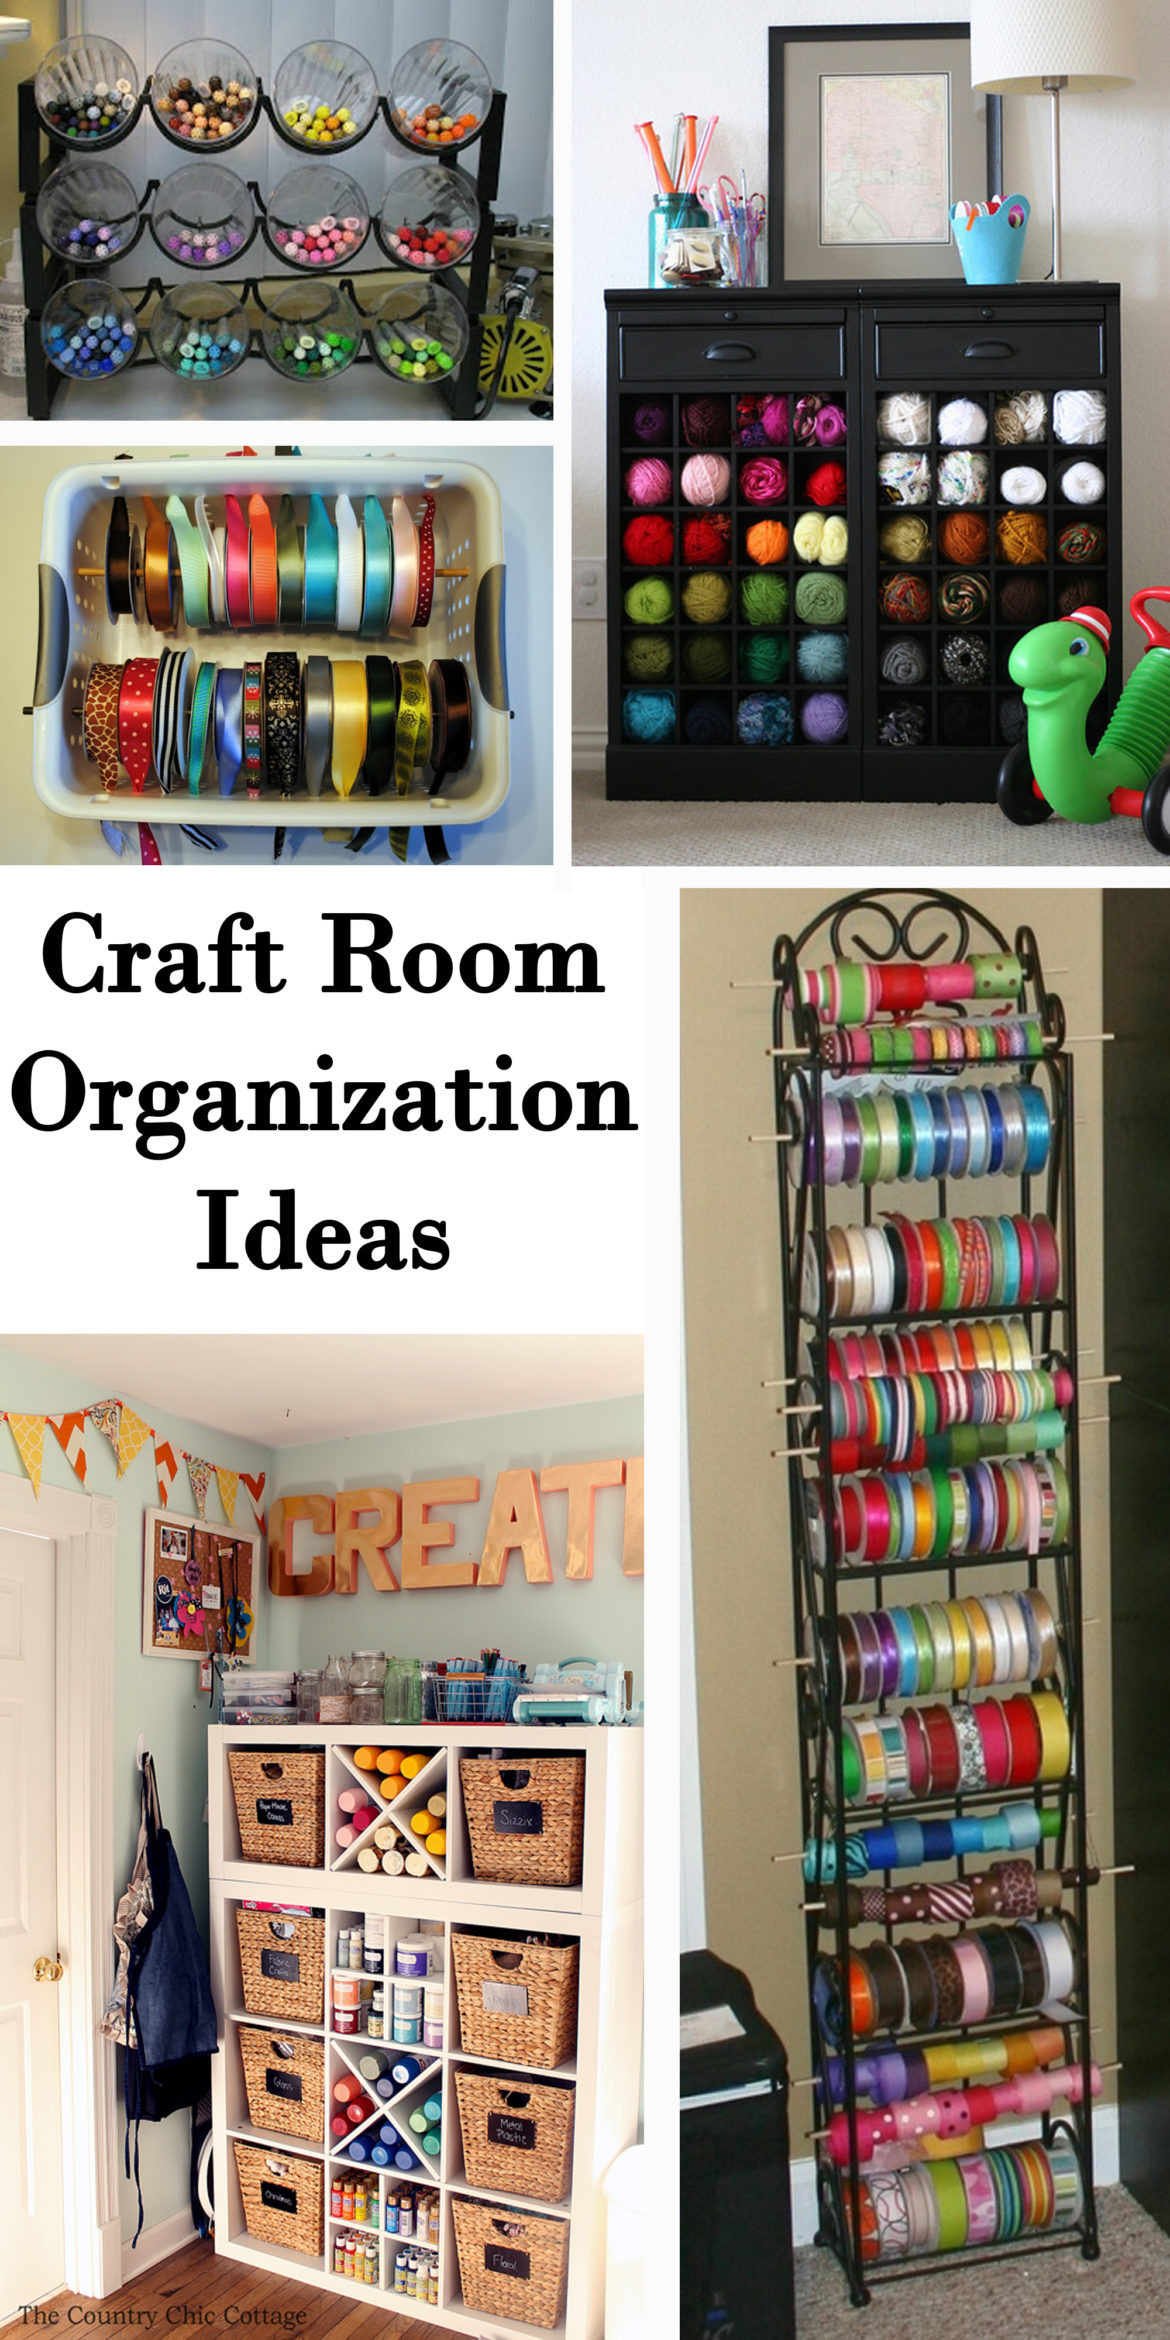 Organization Ideas For Craft Room
 Craft Room Organization Ideas The Keeper of the Cheerios